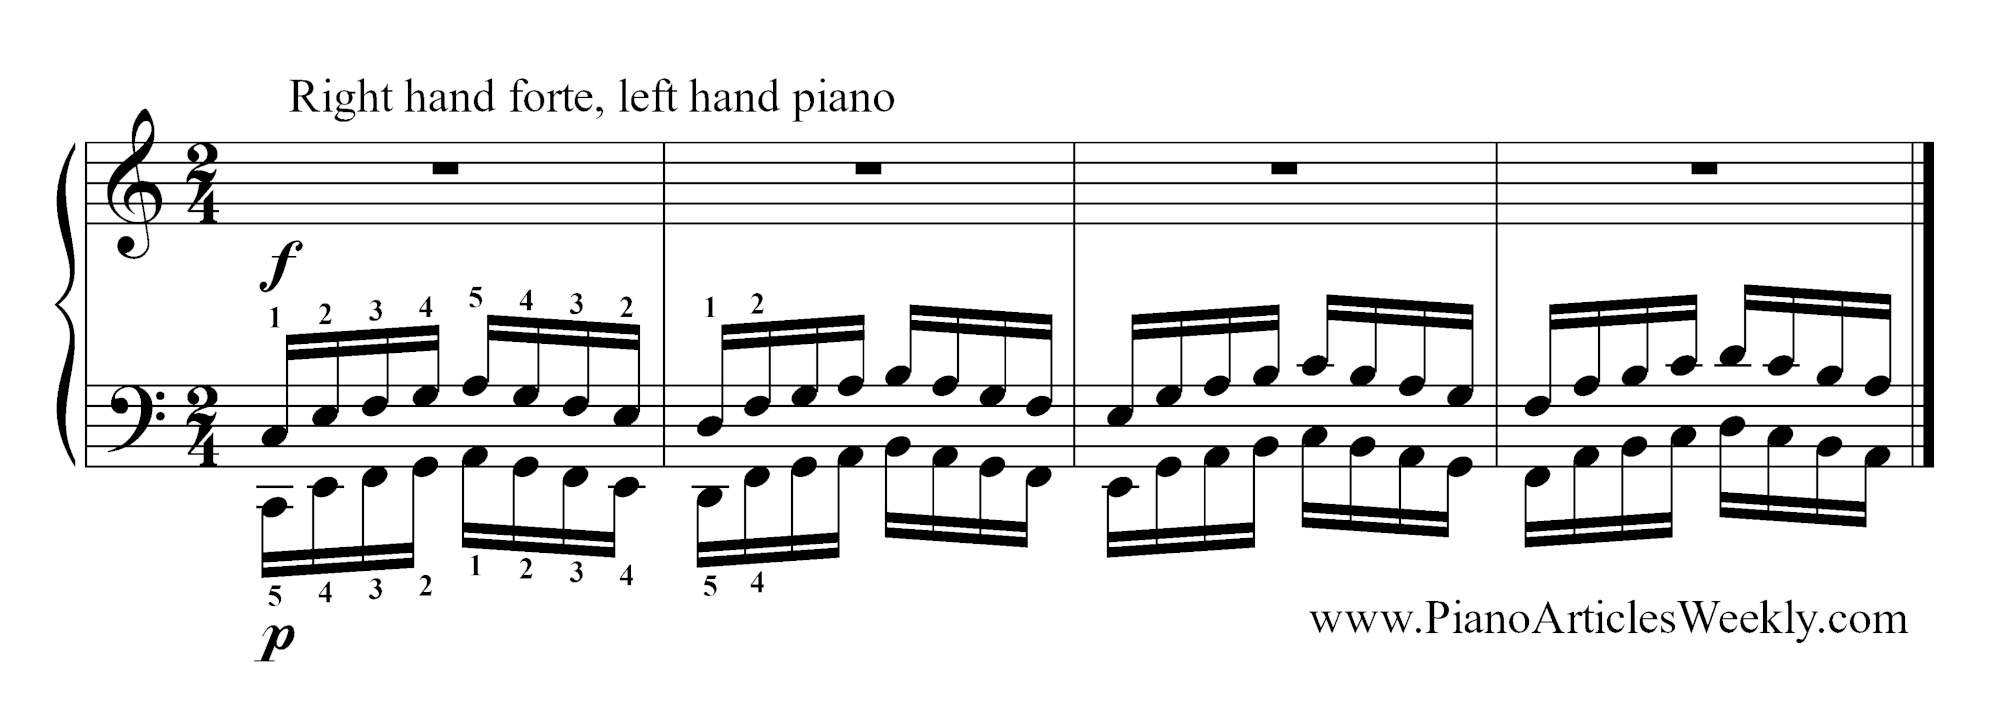 Hanon-Exercise-right-hand-forte-left-hand-piano